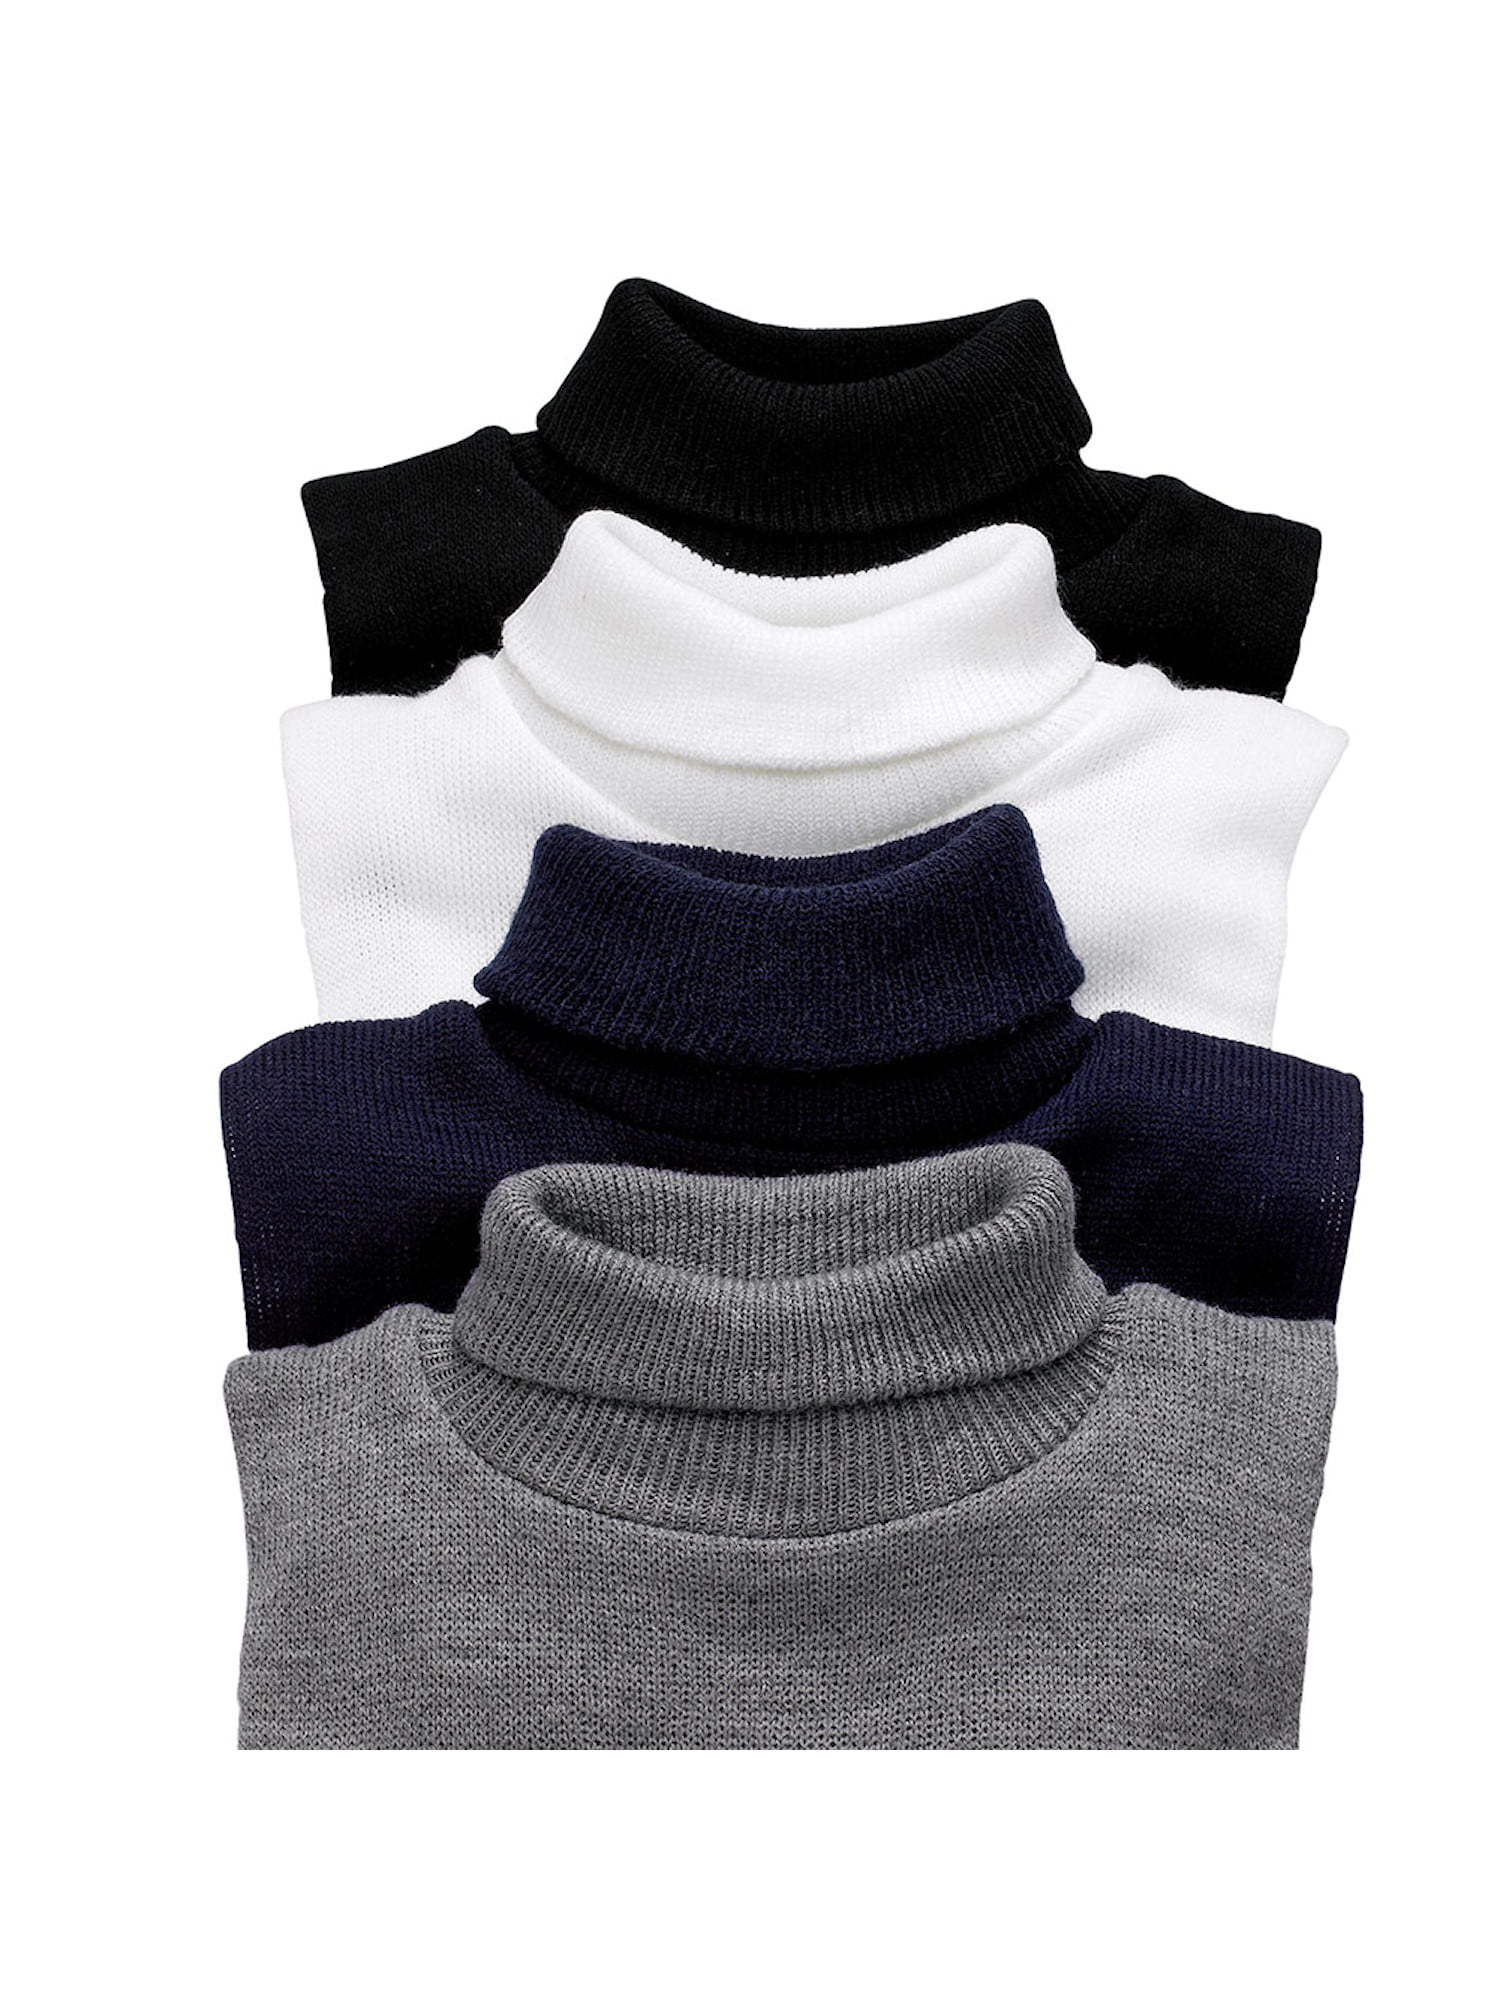 Dickies Unisex-Adult Sweater M Black